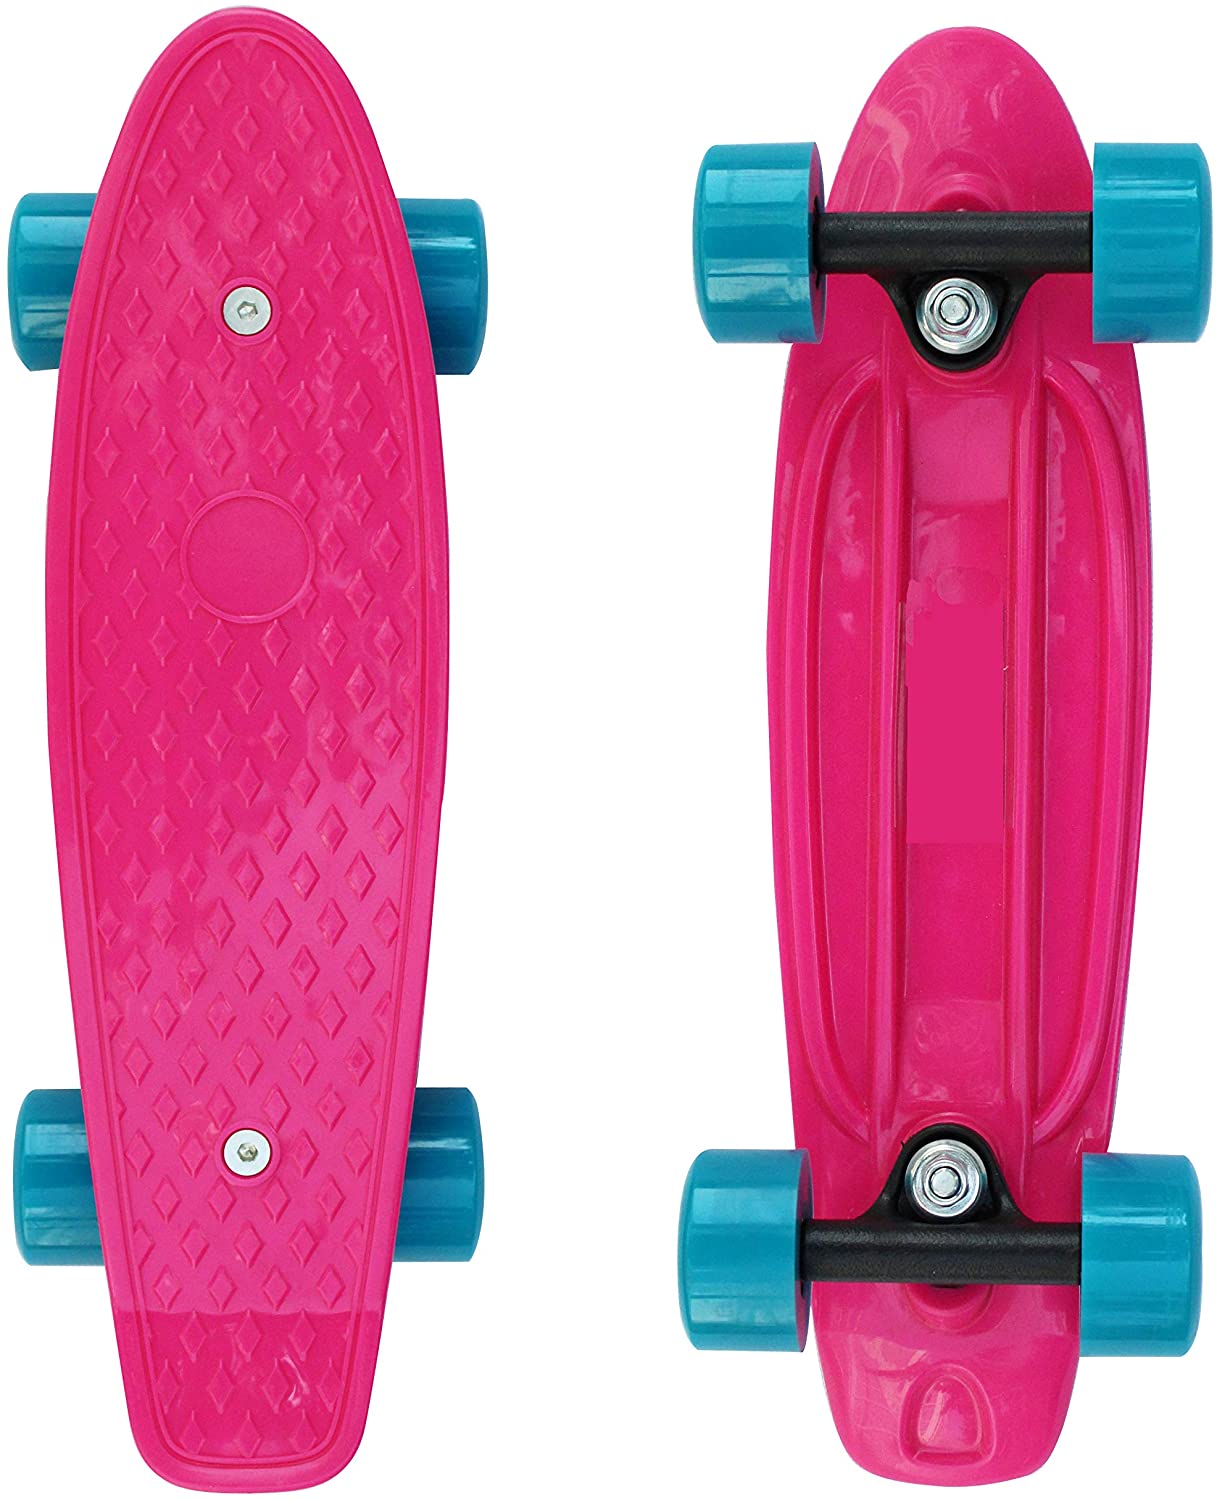 SK8MEMO 17x5 Inch Mini Skateboard with Top Design